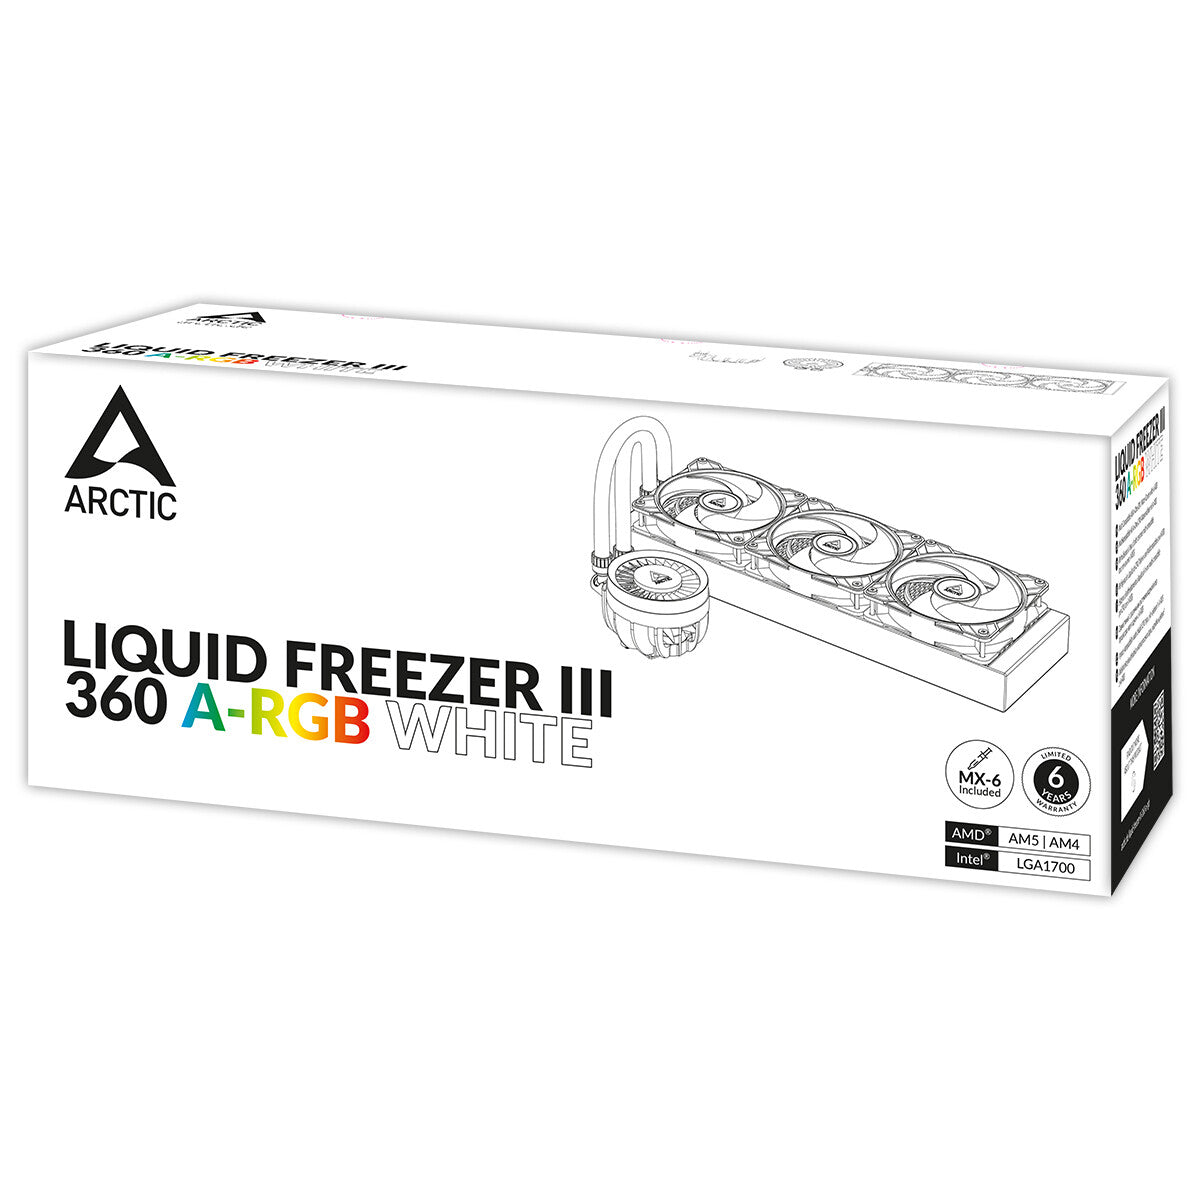 ARCTIC Liquid Freezer III 360 A-RGB - All-in-one Liquid CPU Cooler in White - 360mm